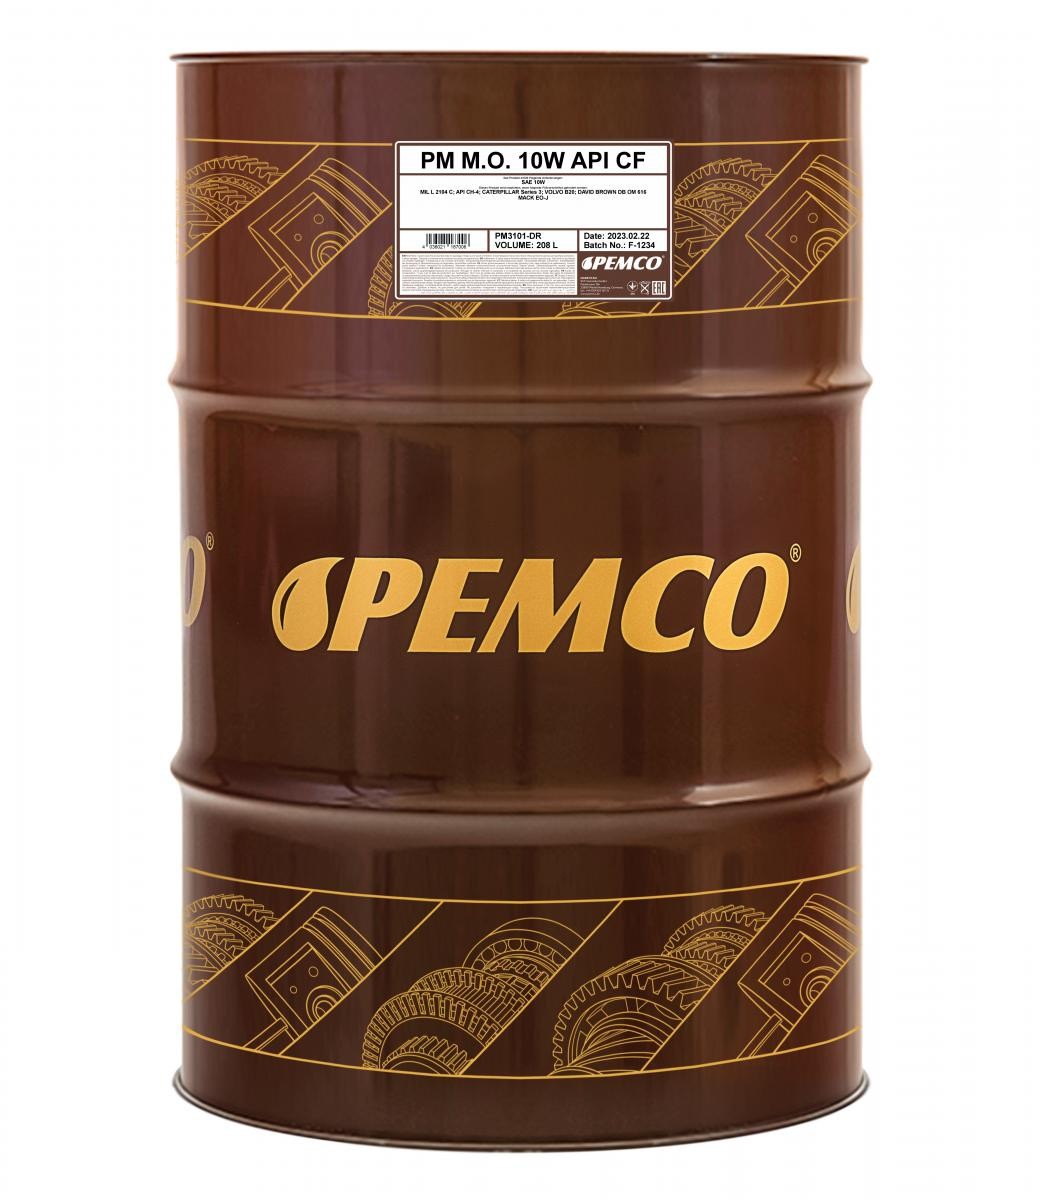 Car oil API SD PEMCO - PM3101-DR M.O. SAE 10W